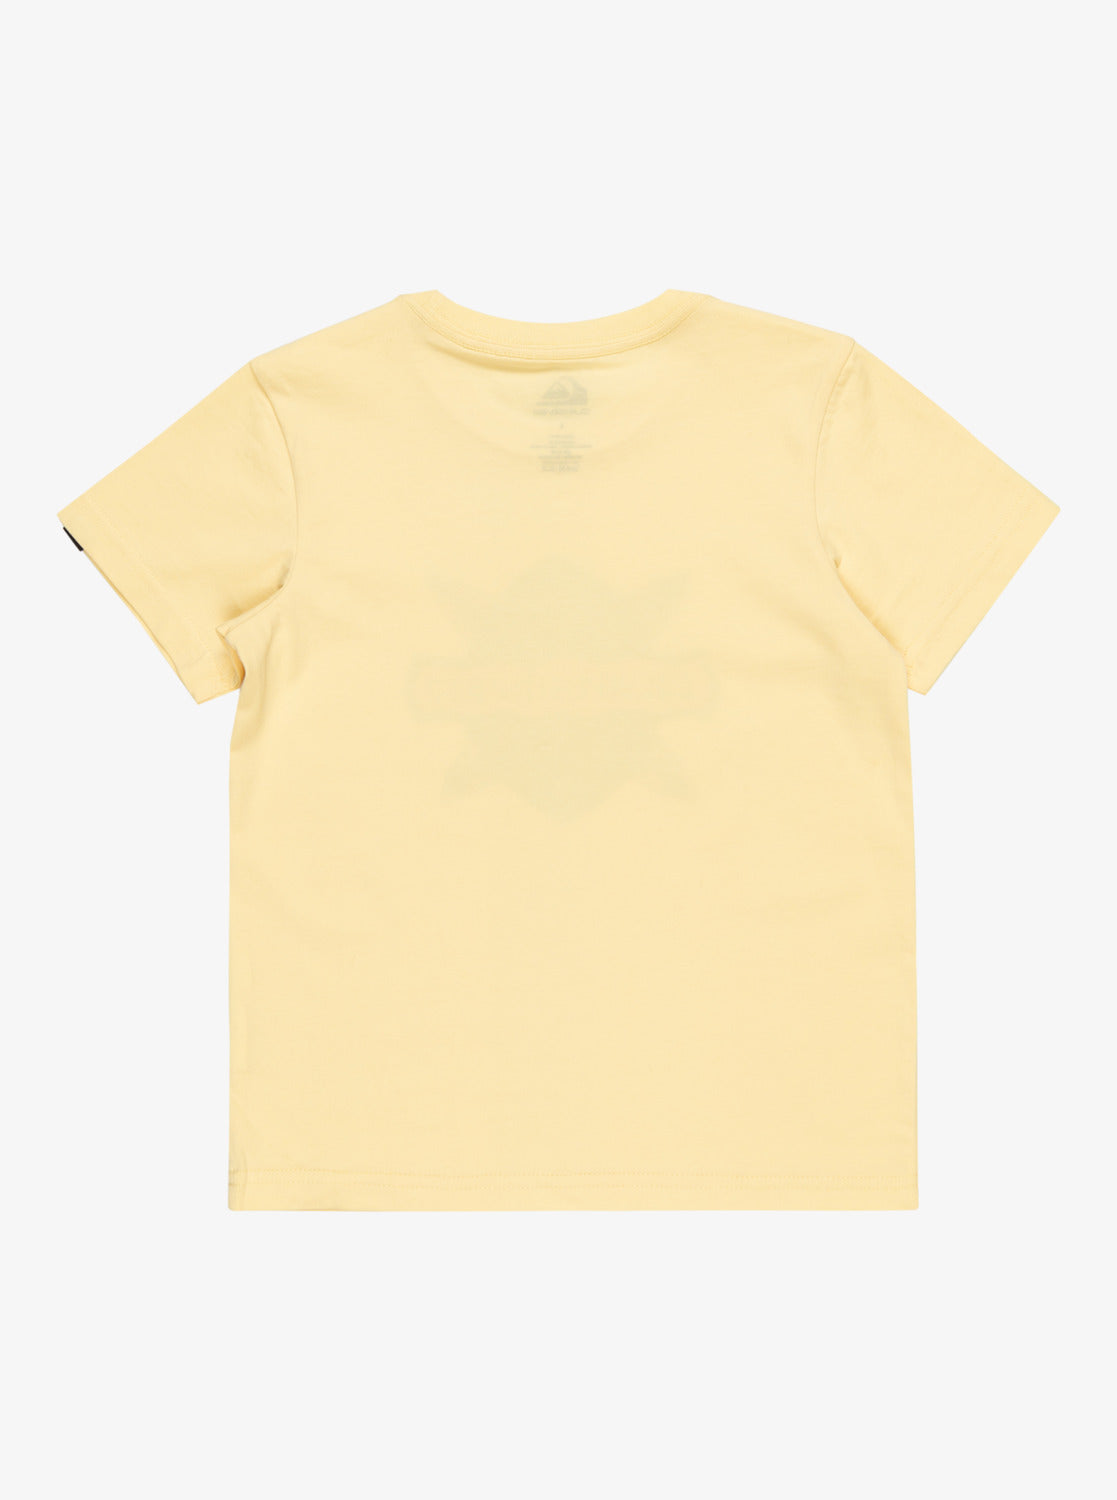 Quiksilver Rain Maker Infant T-Shirt in Mellow Yellow